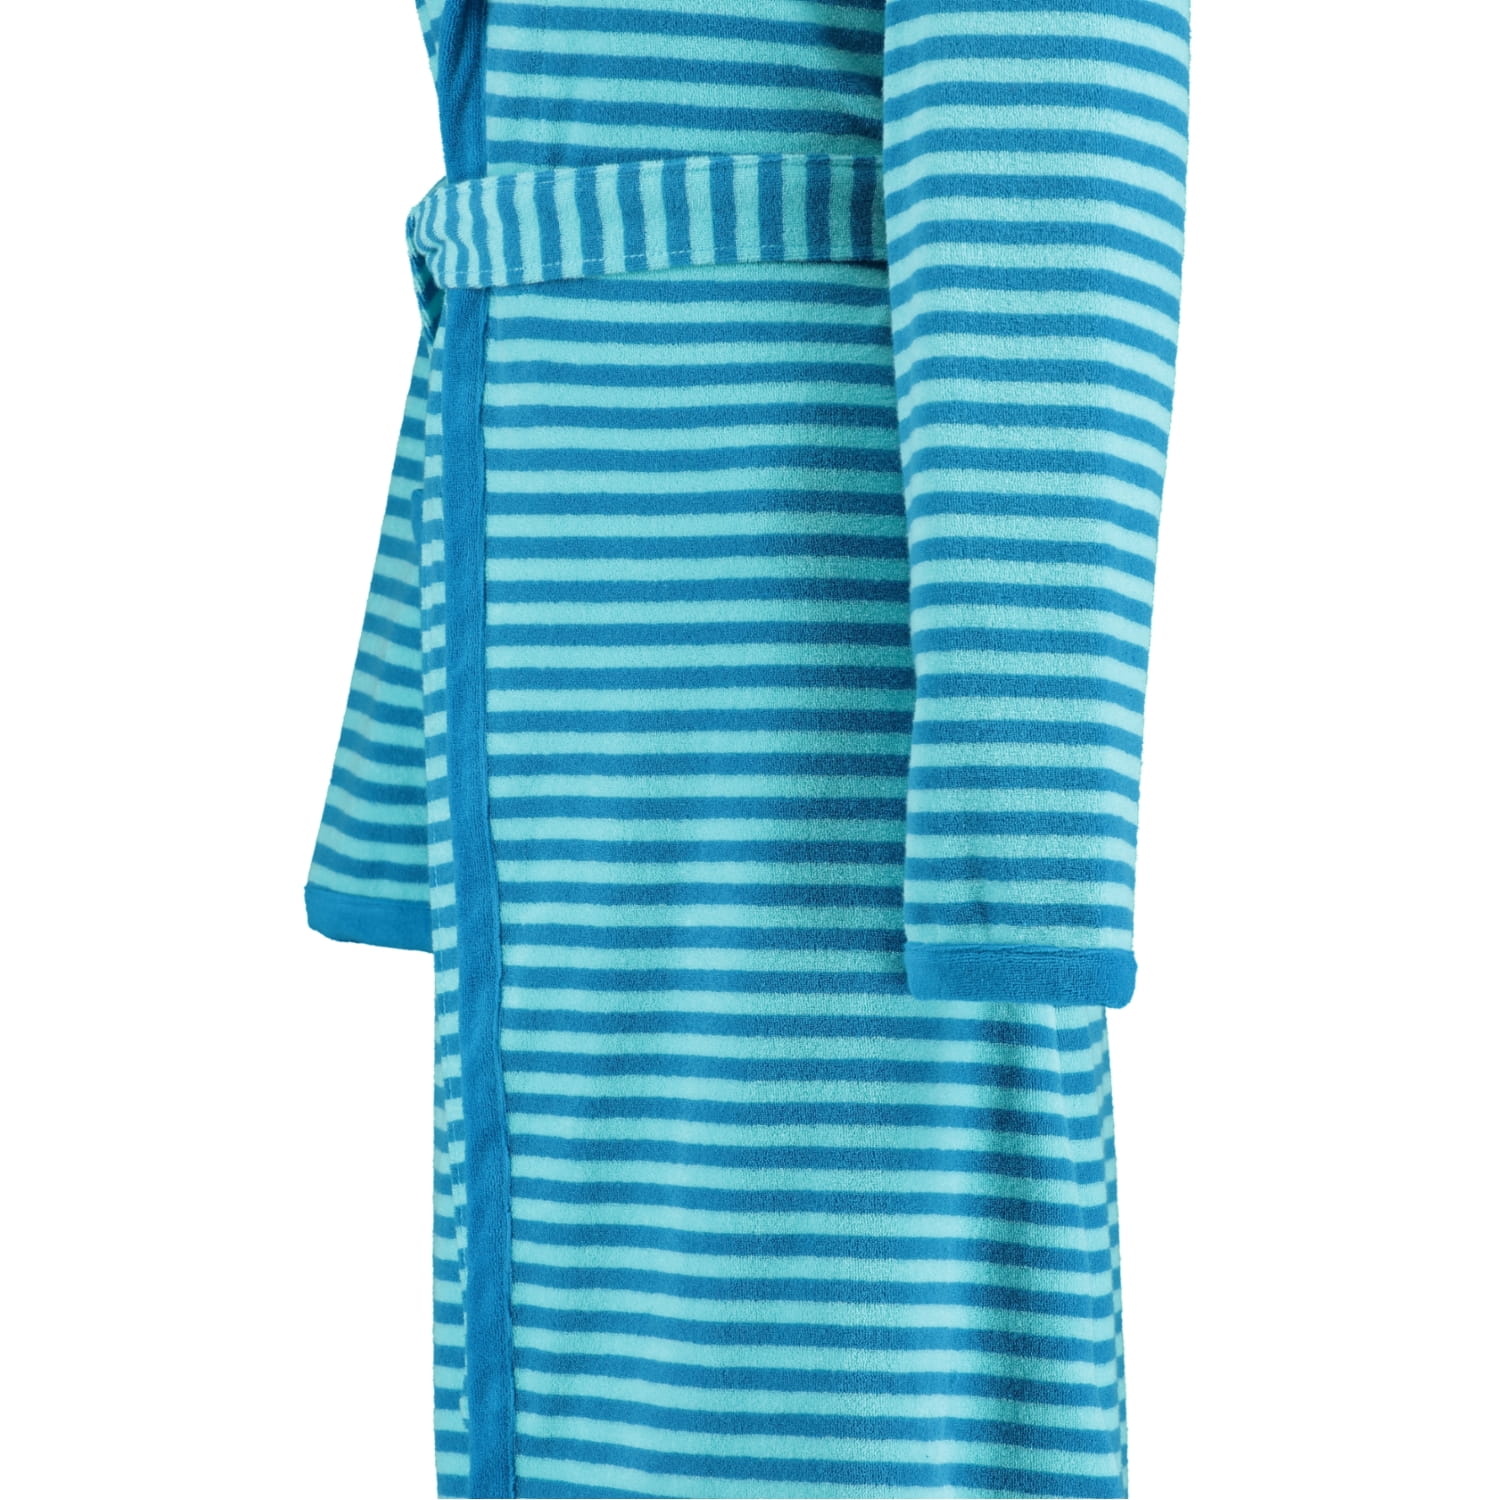 Esprit Damen Striped L turquoise Bademantel Bademantel | Hoody - Damen 002 | Farbe: - Kapuze